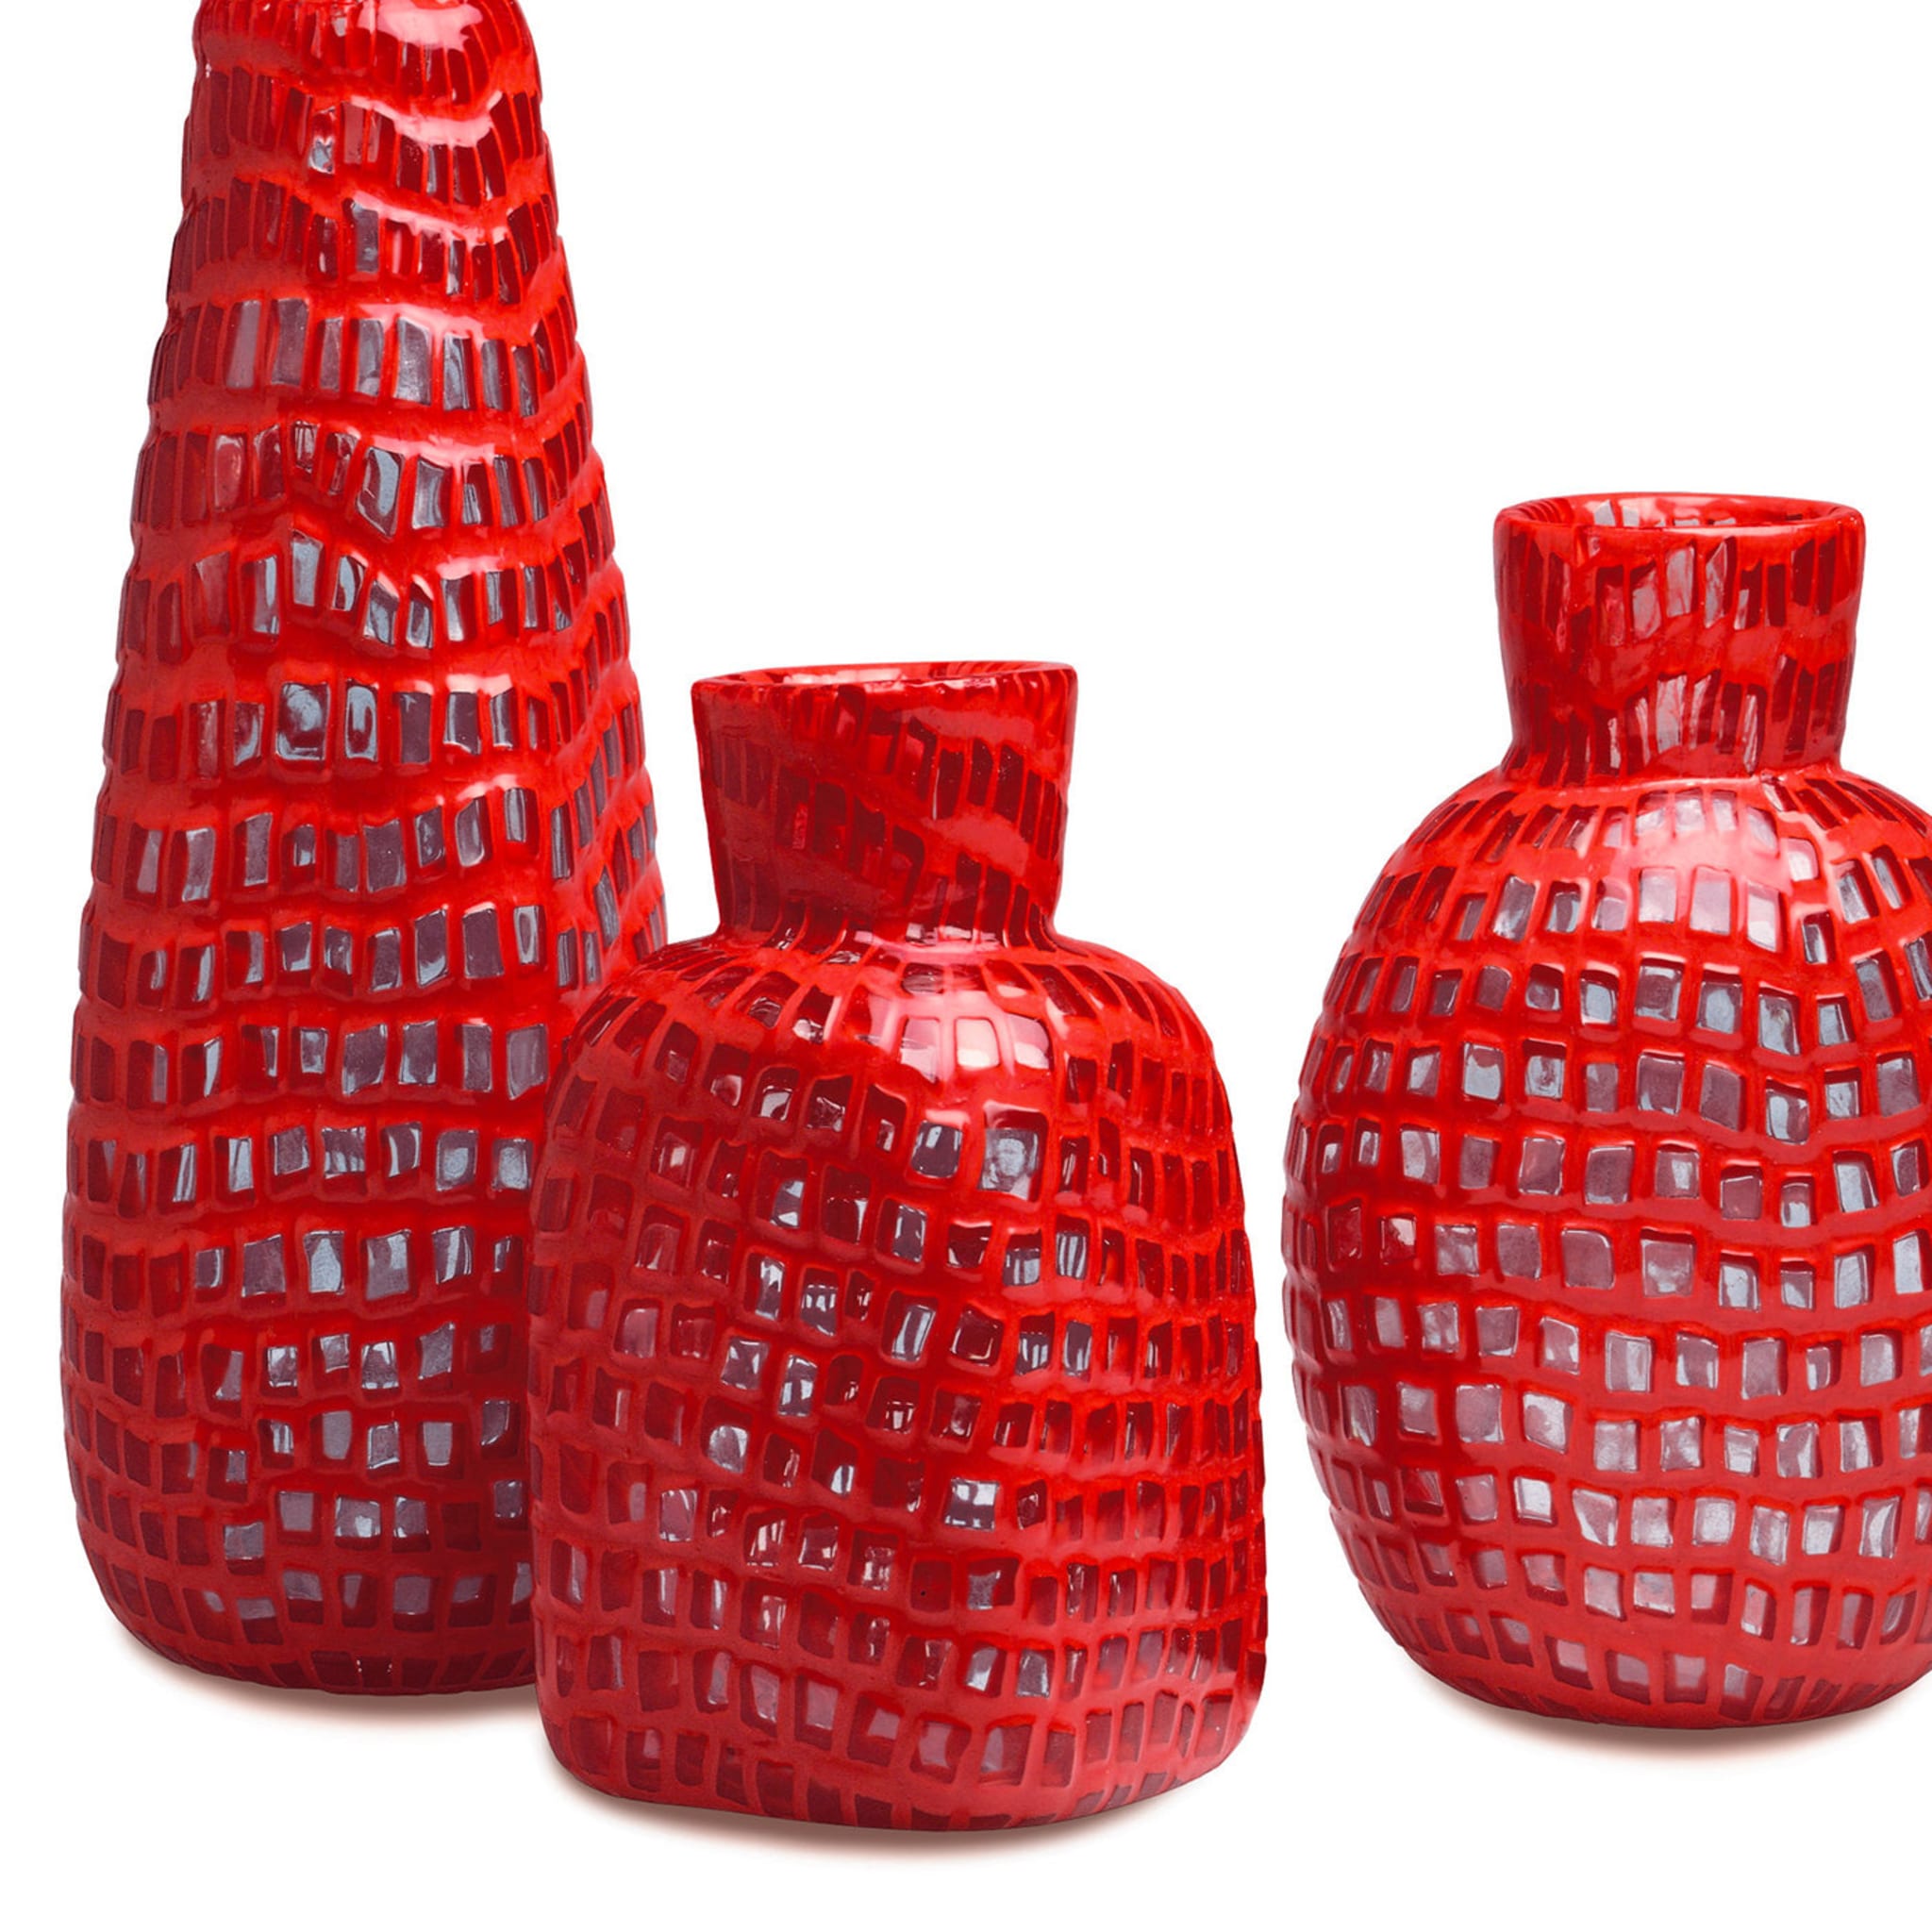 Occhi Vase by Ludovico Diaz de Santillana and Tobia Scarpa # 2 - Alternative view 1